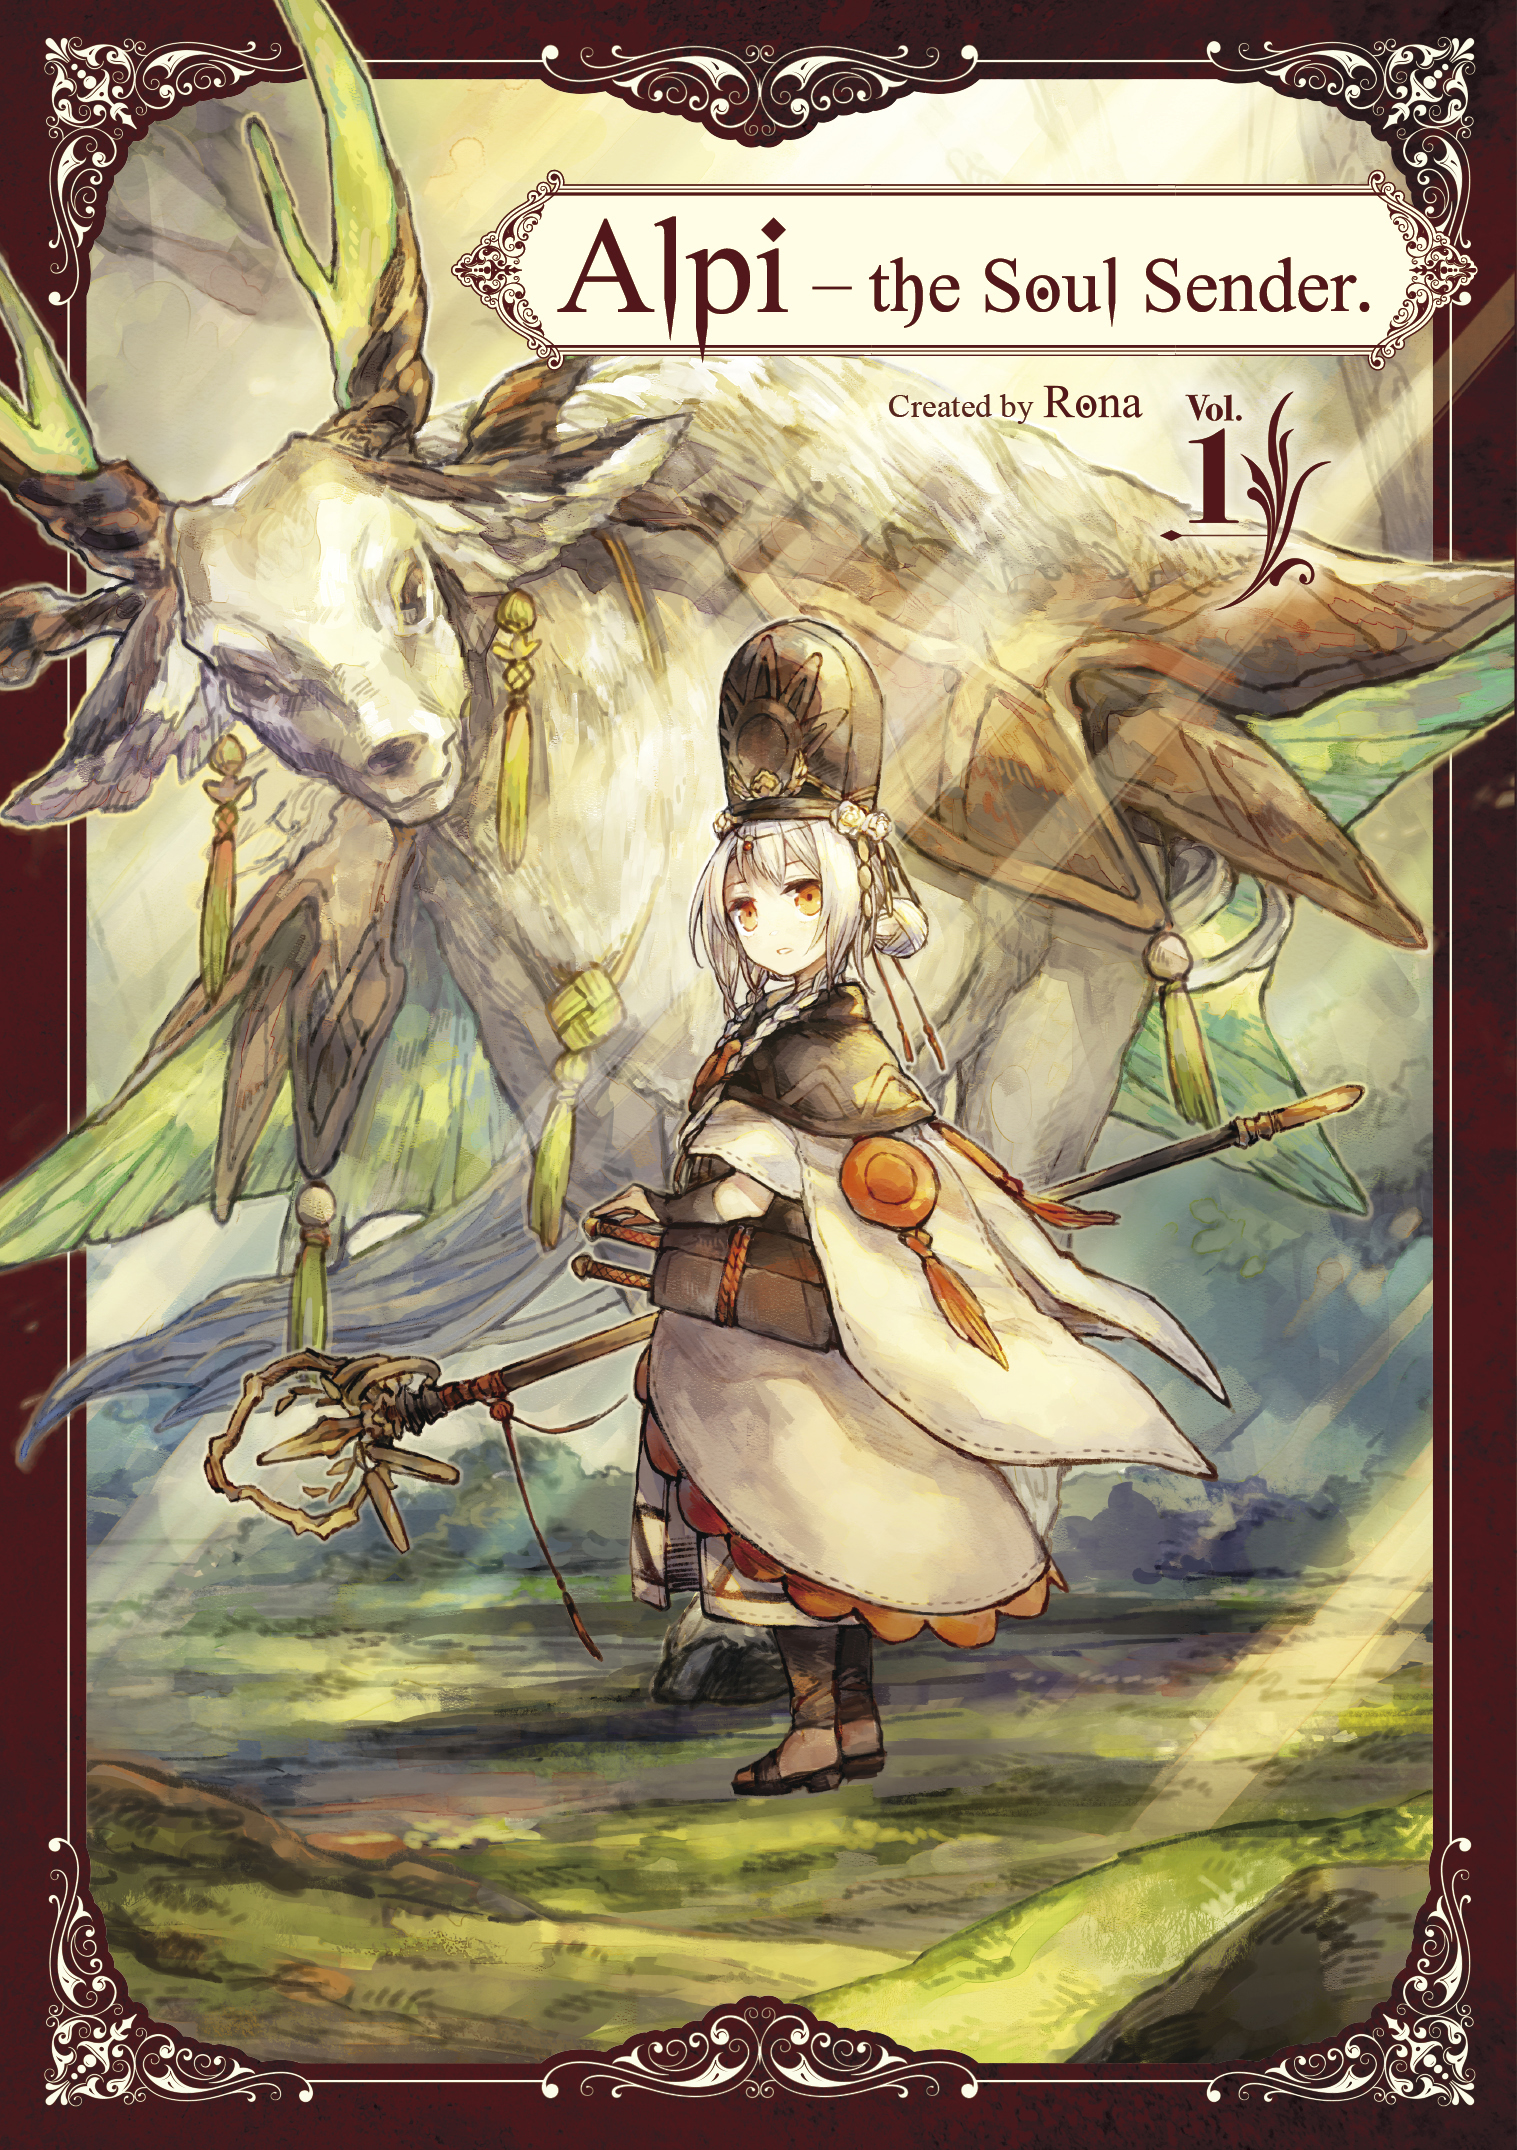 Ablaze Publishing Previews 'Saint Seiya: Knights Of The Zodiac Time  Odyssey' #1 – COMICON